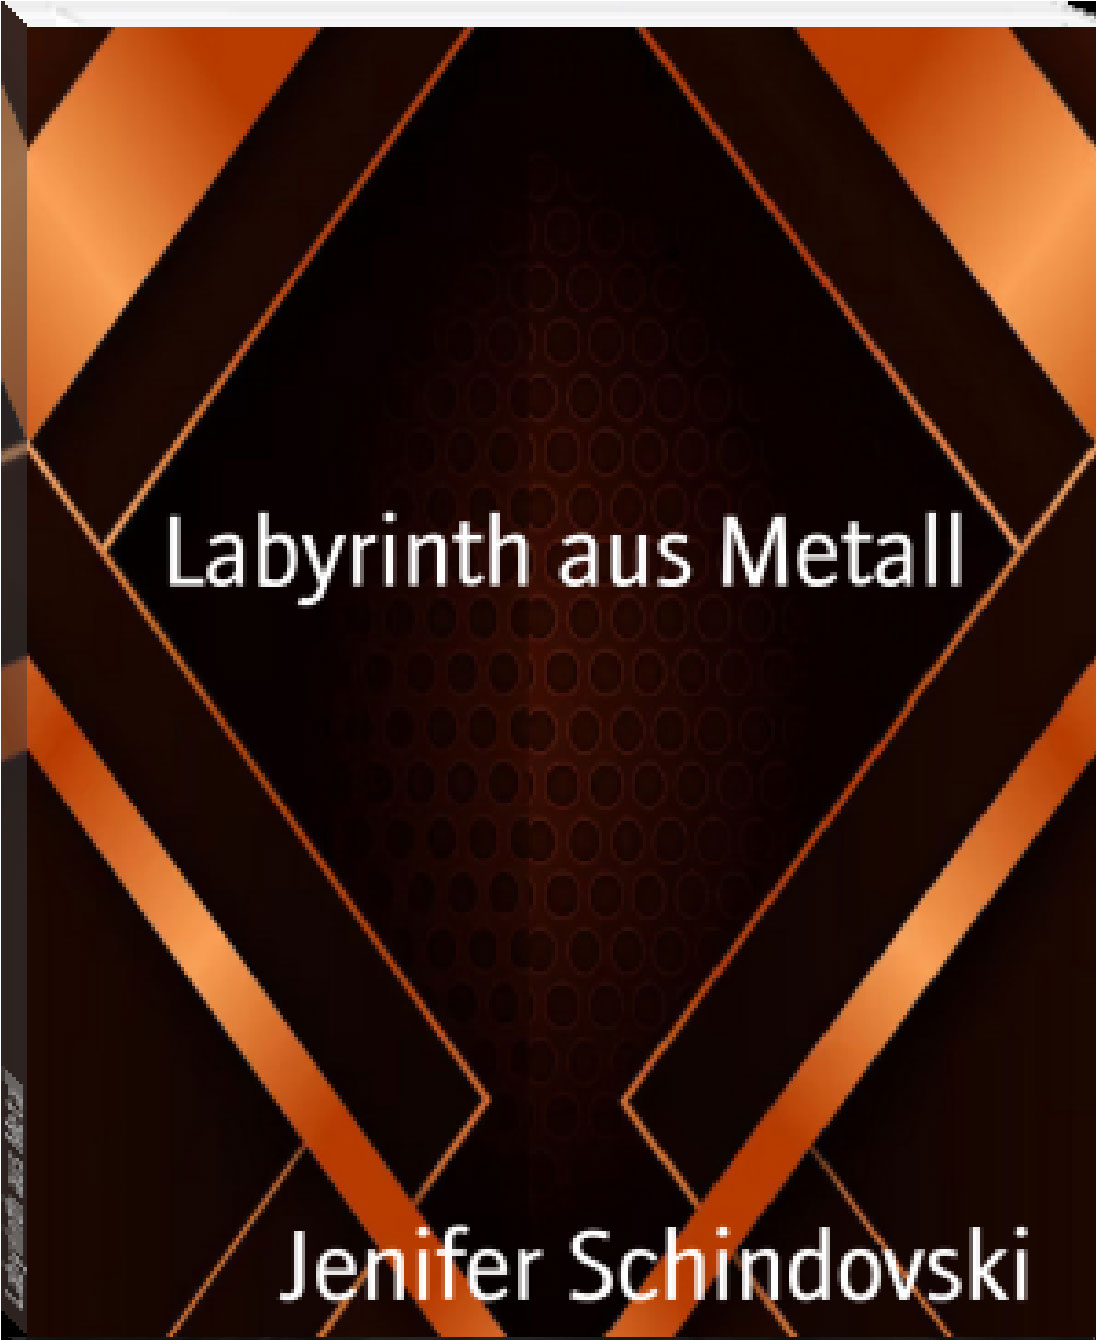 Labyrinth aus Metall rendition image